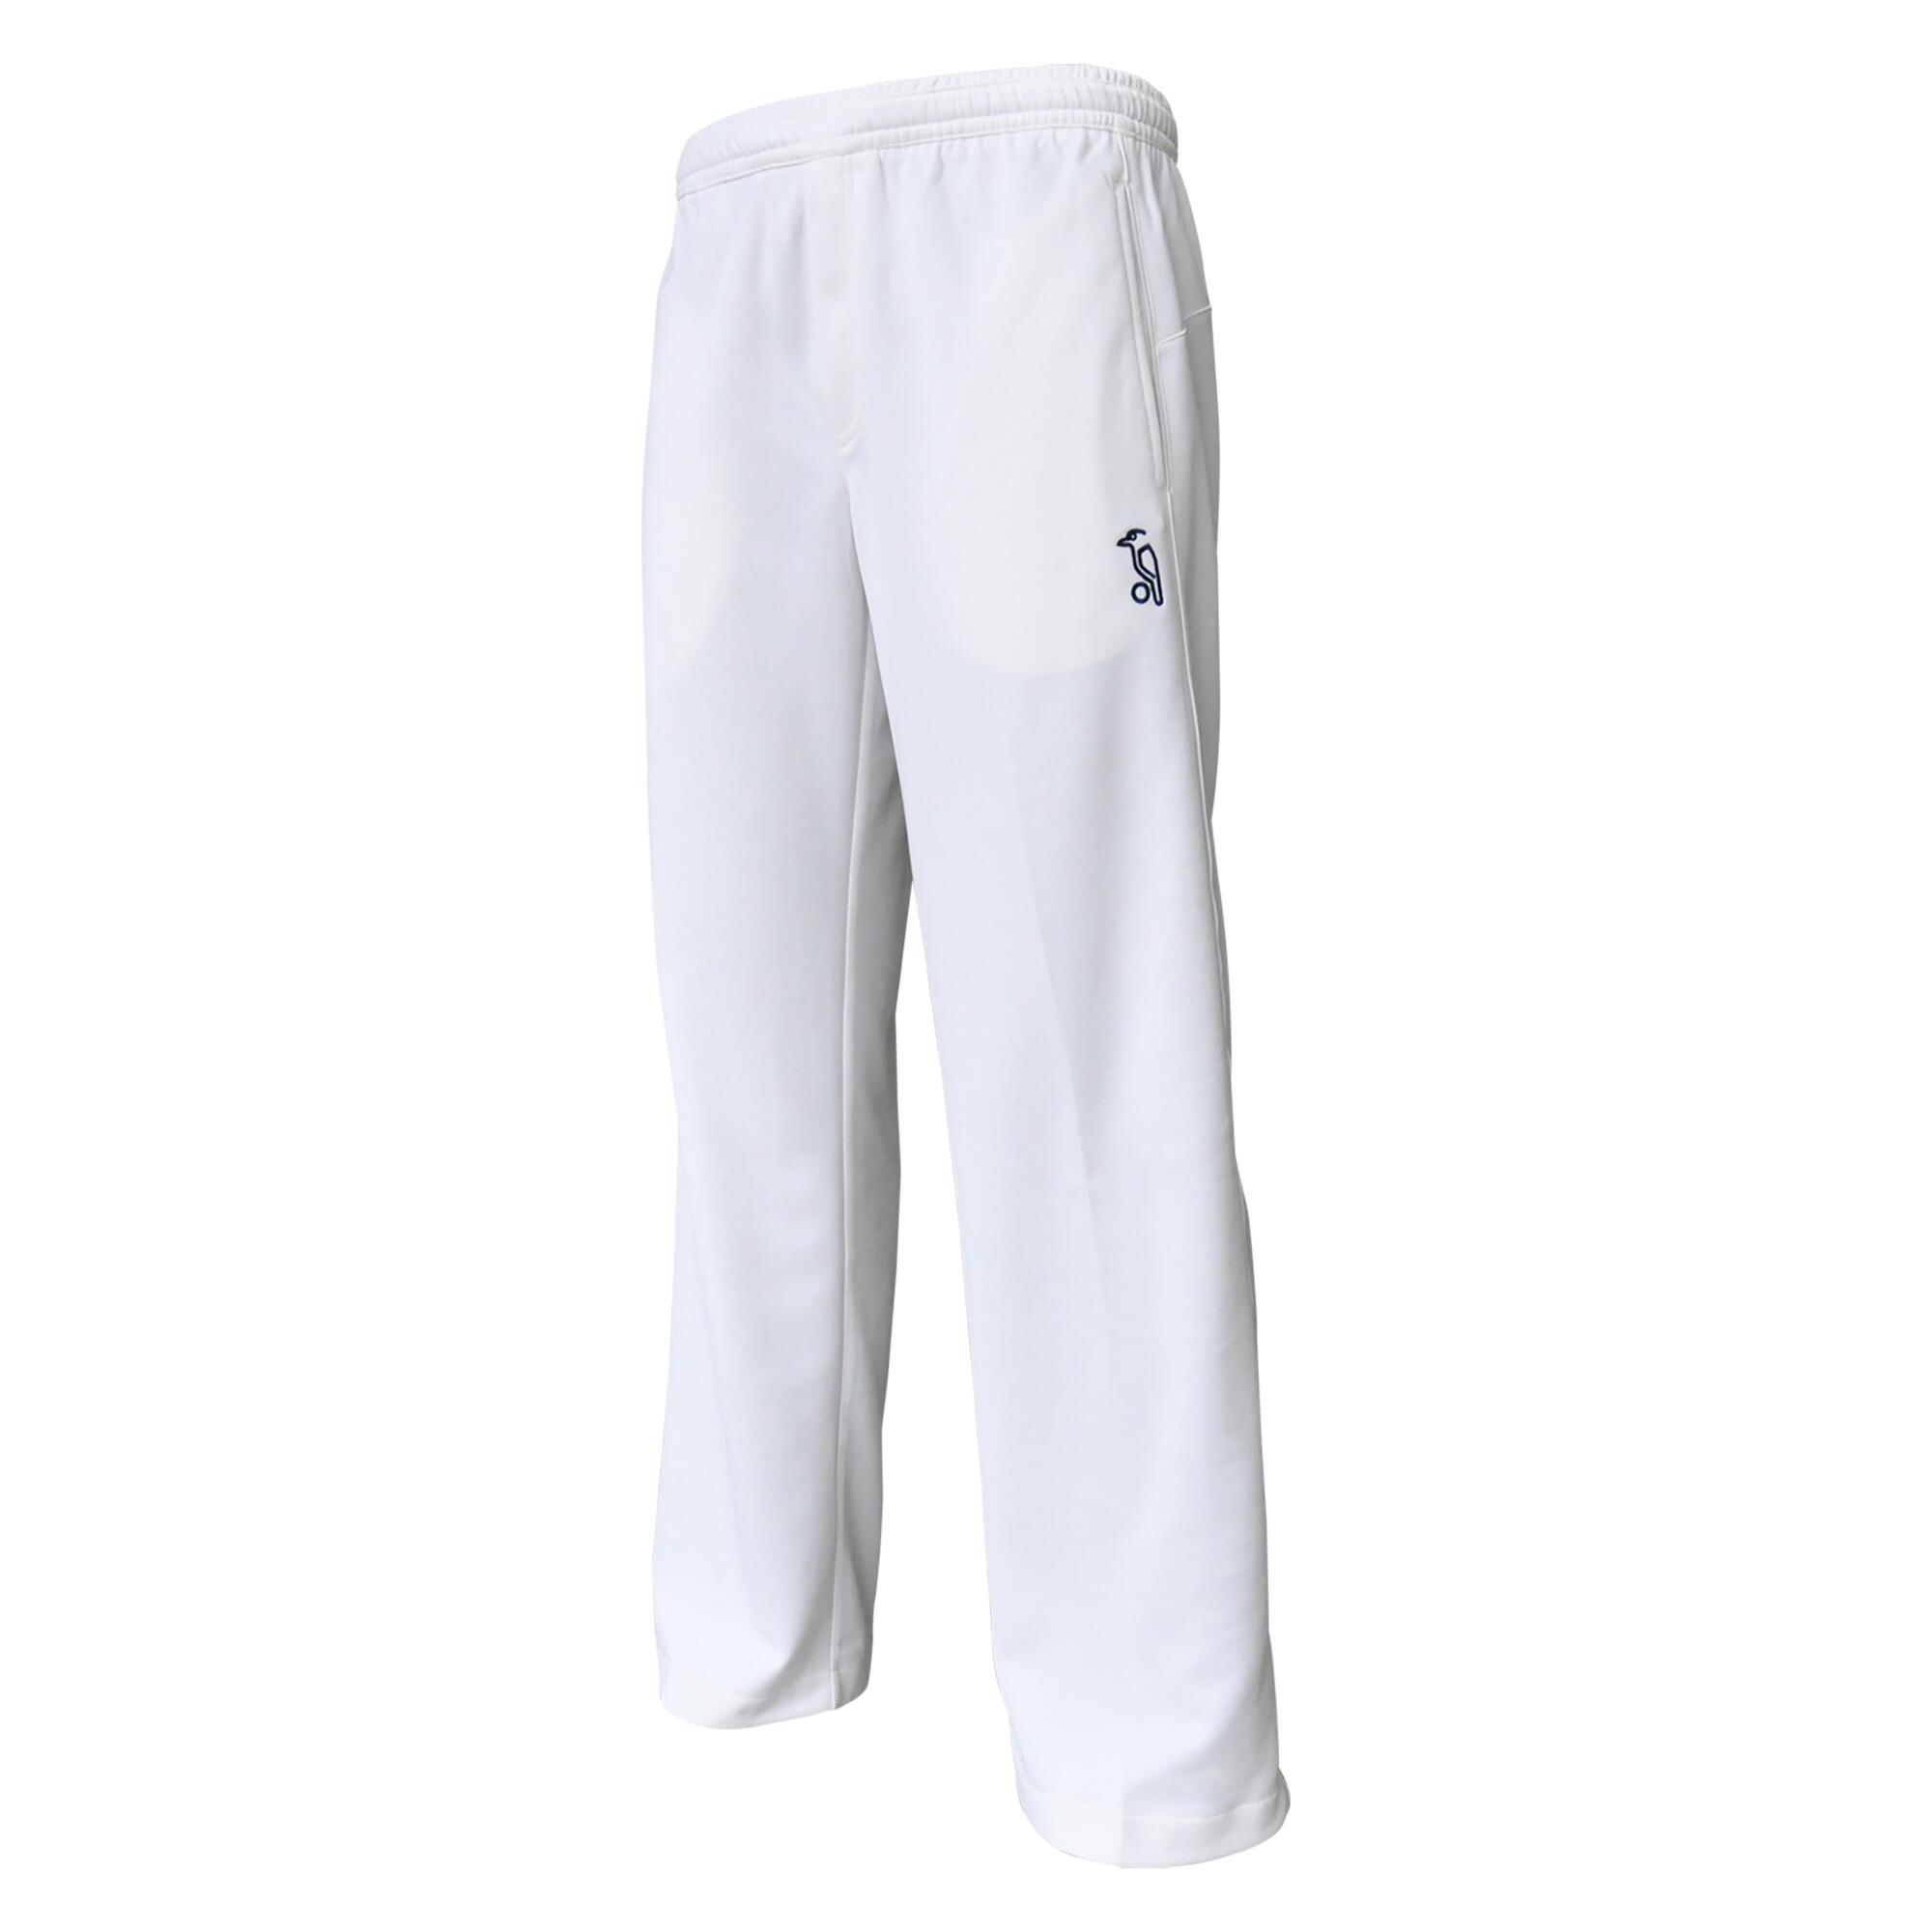 KOOKABURRA Kookaburra Pro Player Cricket Trousers White